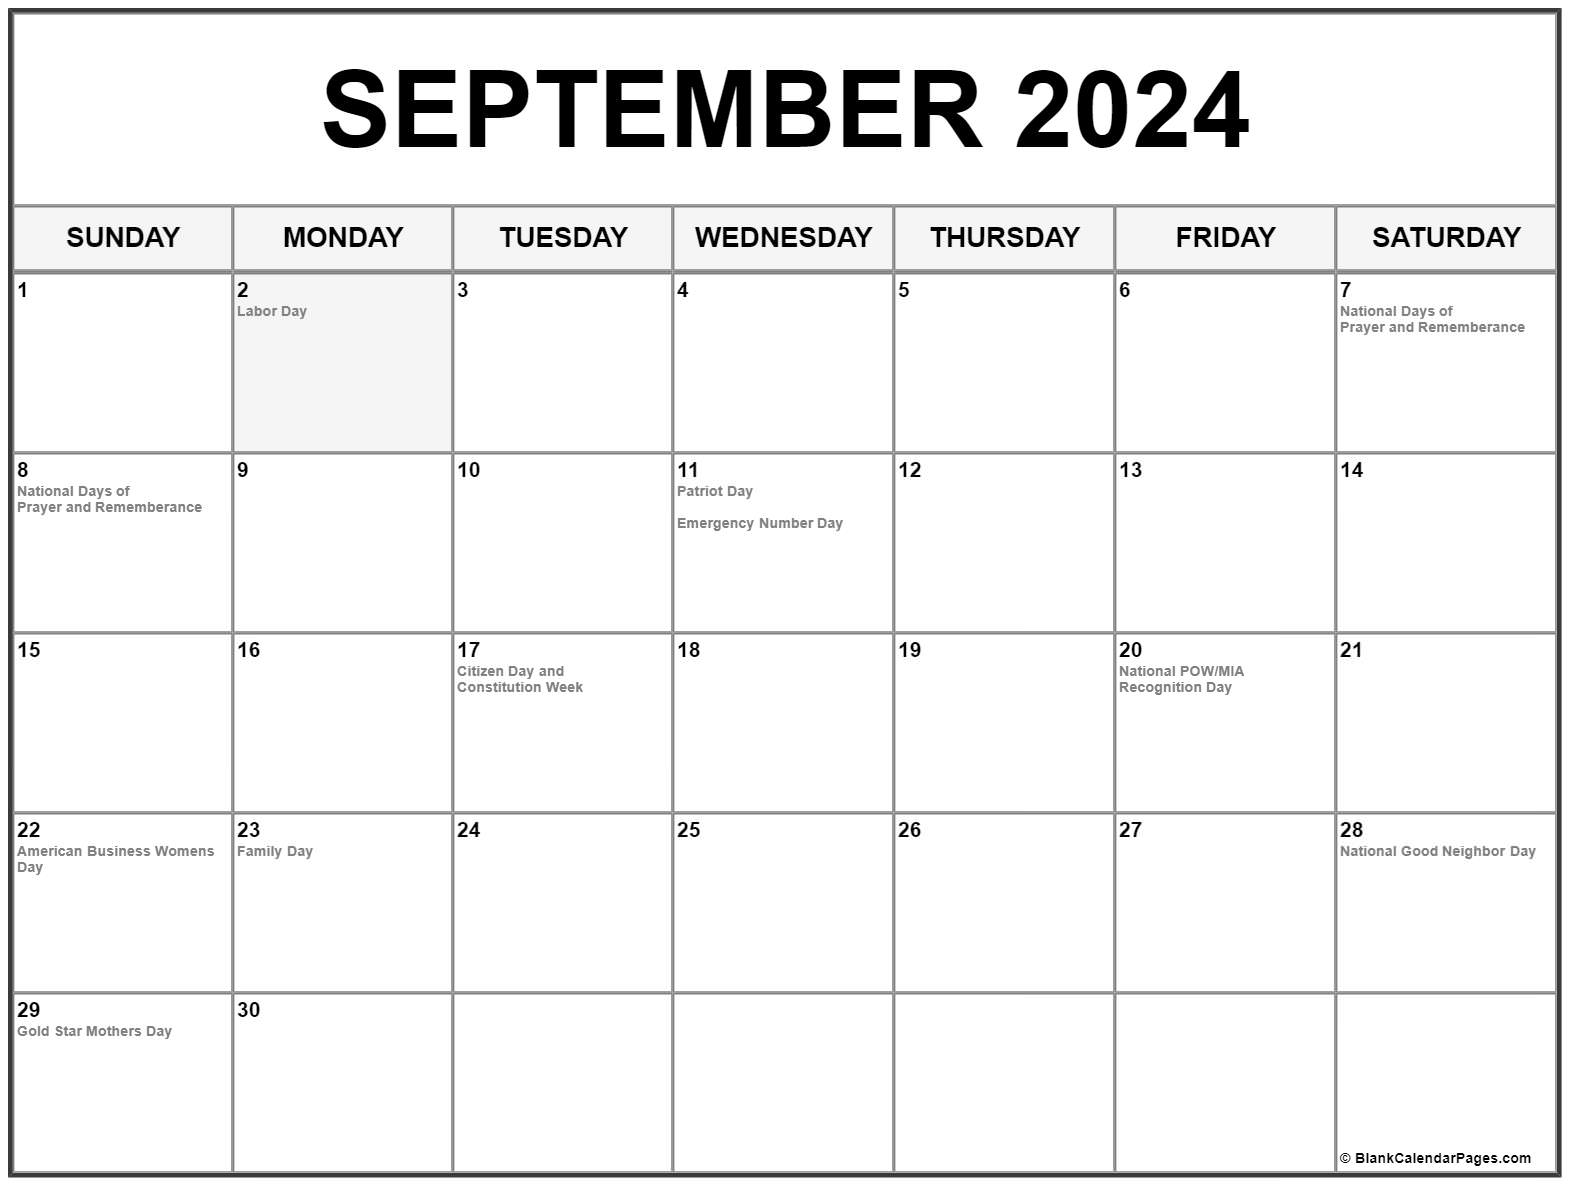 Calendar For Sept 2024 Sgdq 2024 Schedule